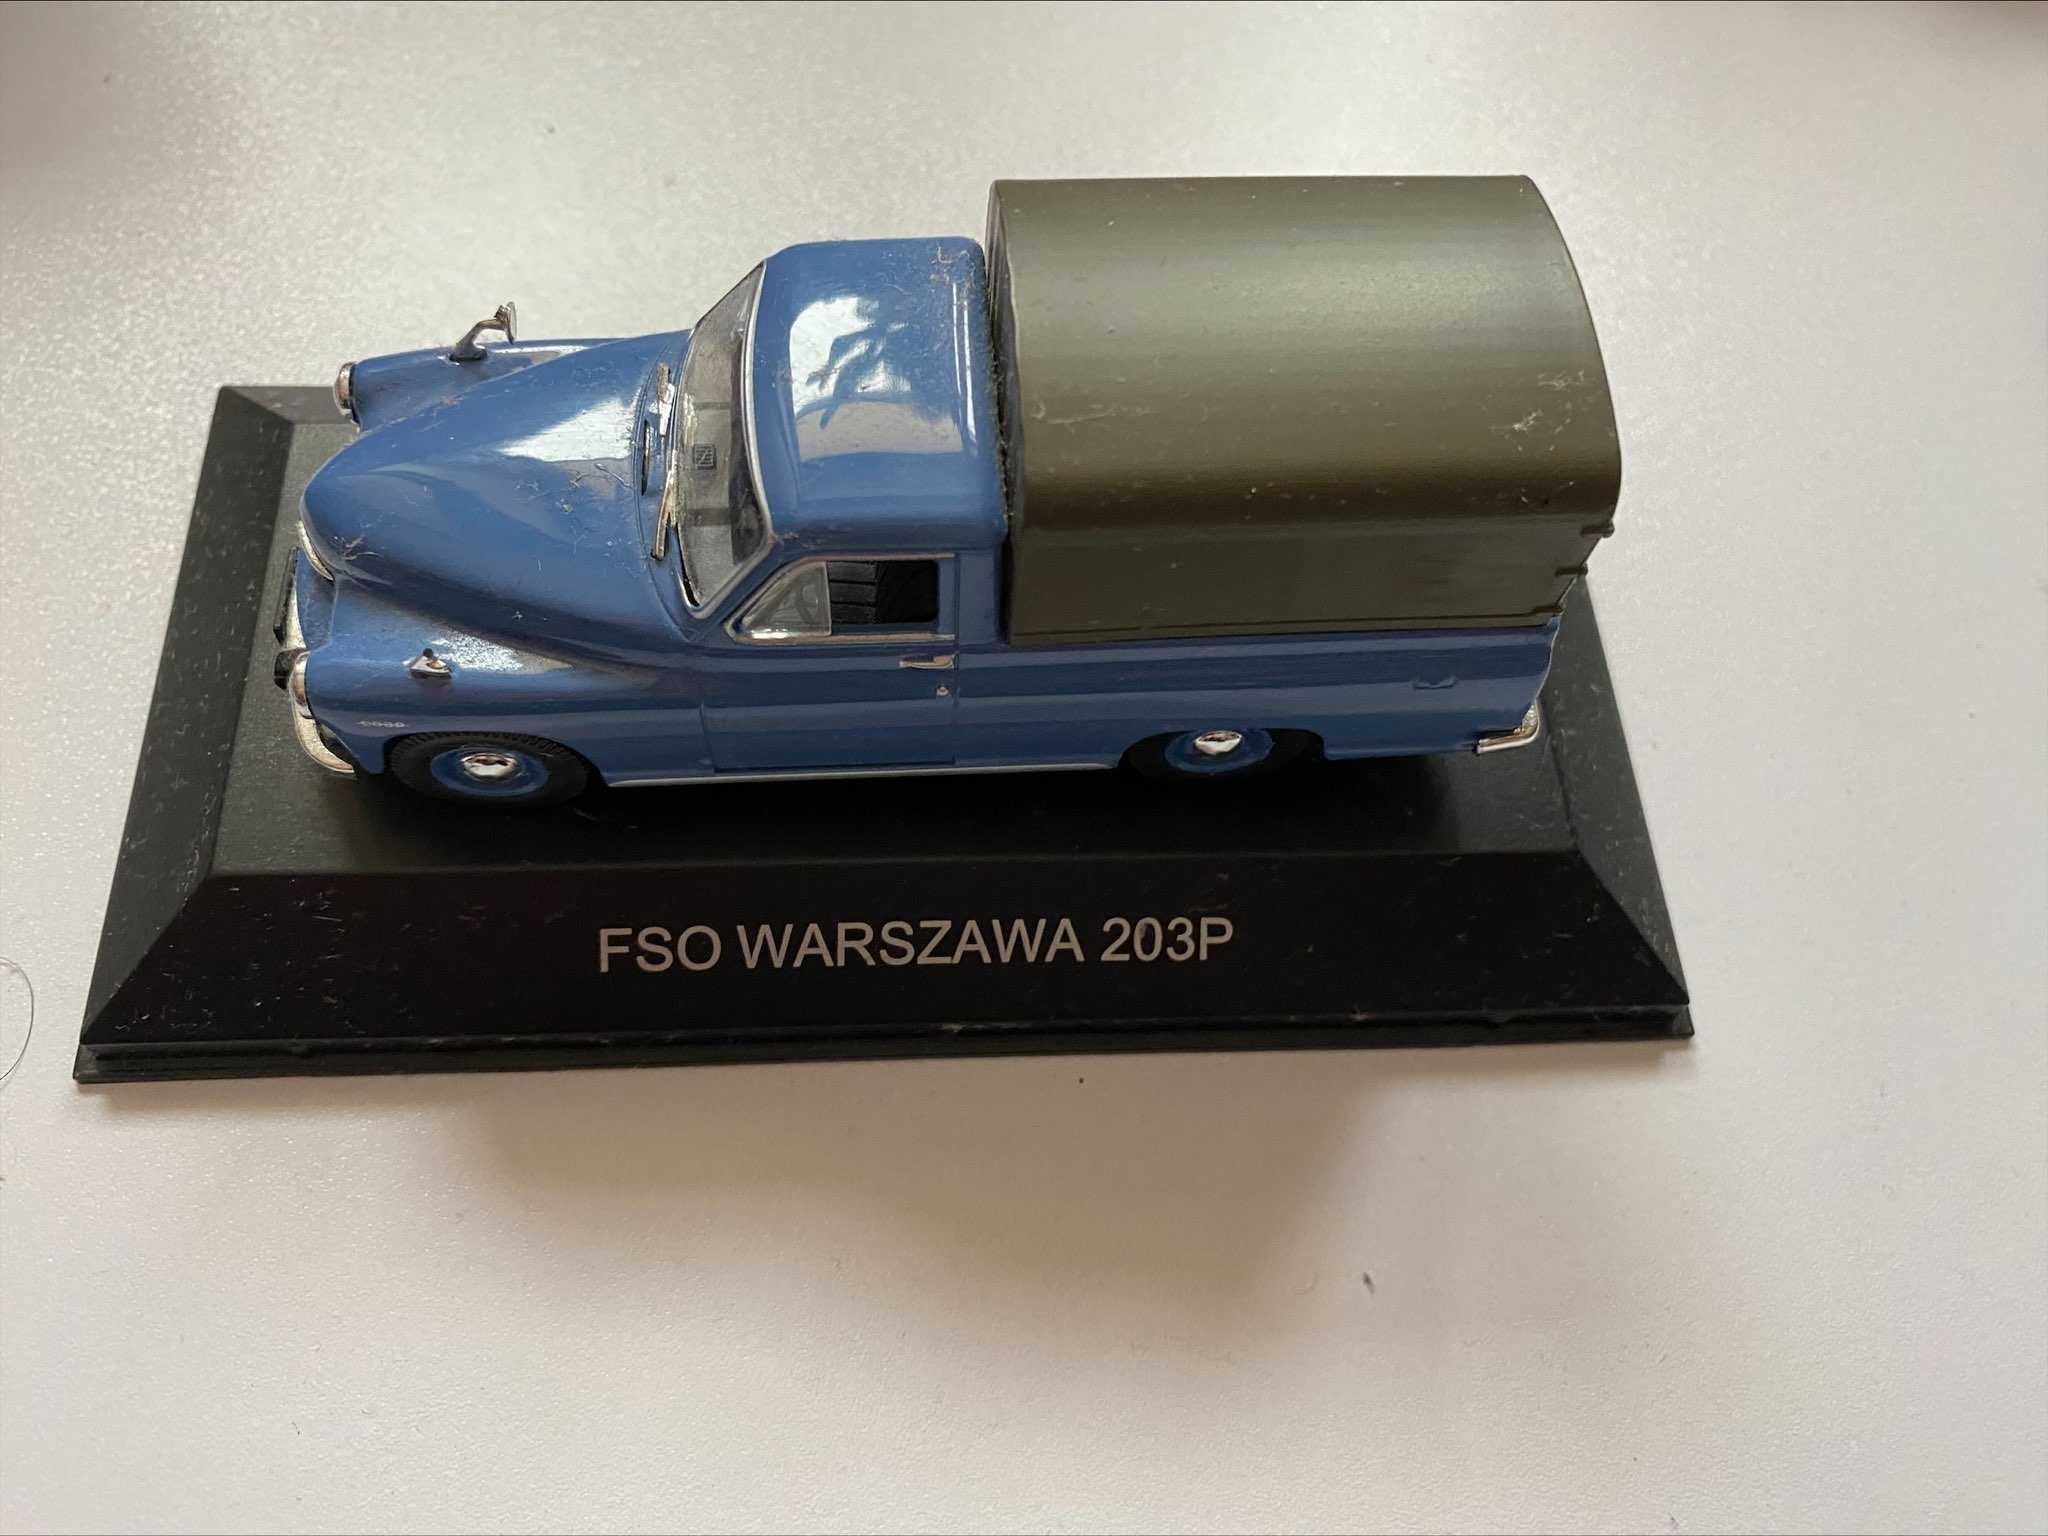 WARSZAWA 203P Legendy FSO - Unikat - OKAZJA